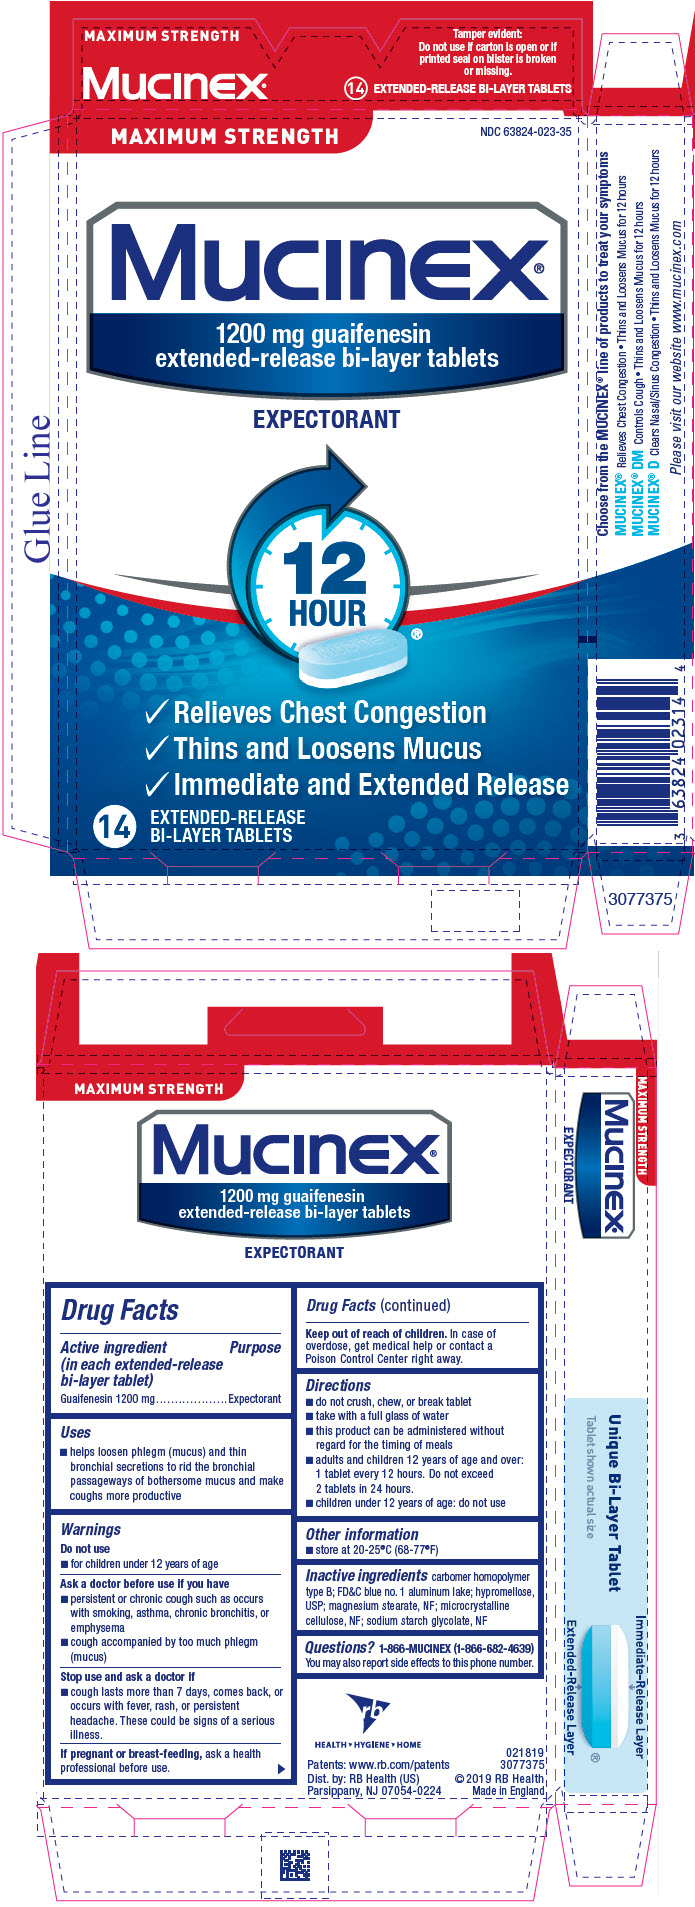 Mucinex Maximum Strength Package